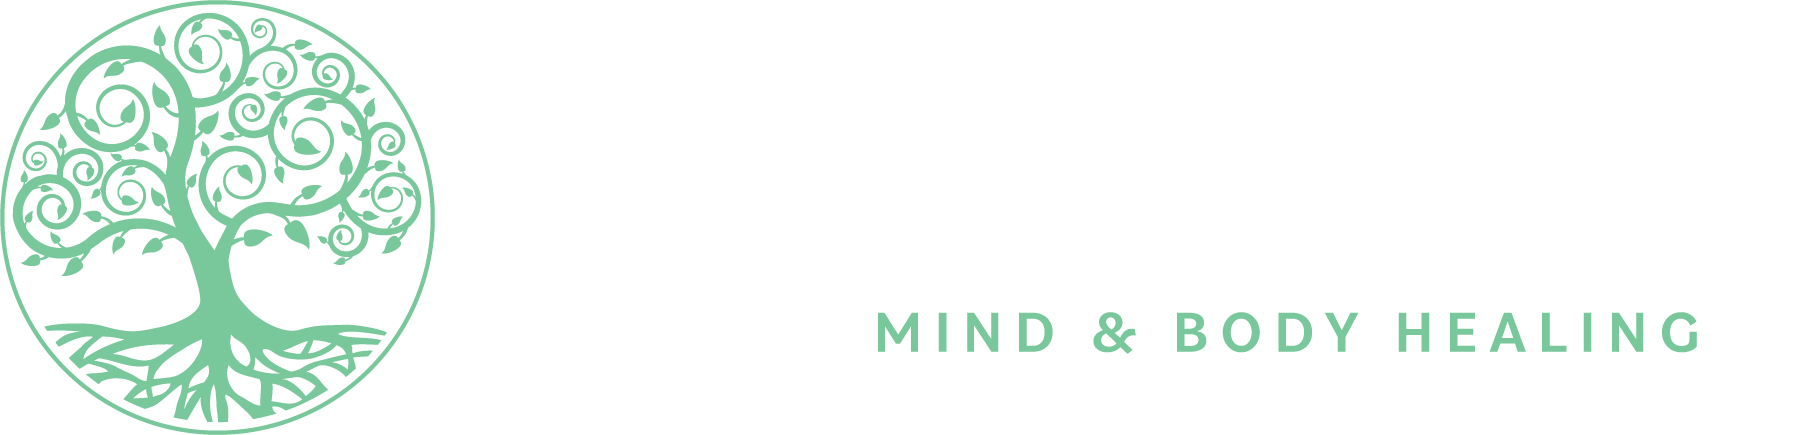 Beyond Belief Body Mind and Healing Logo Main